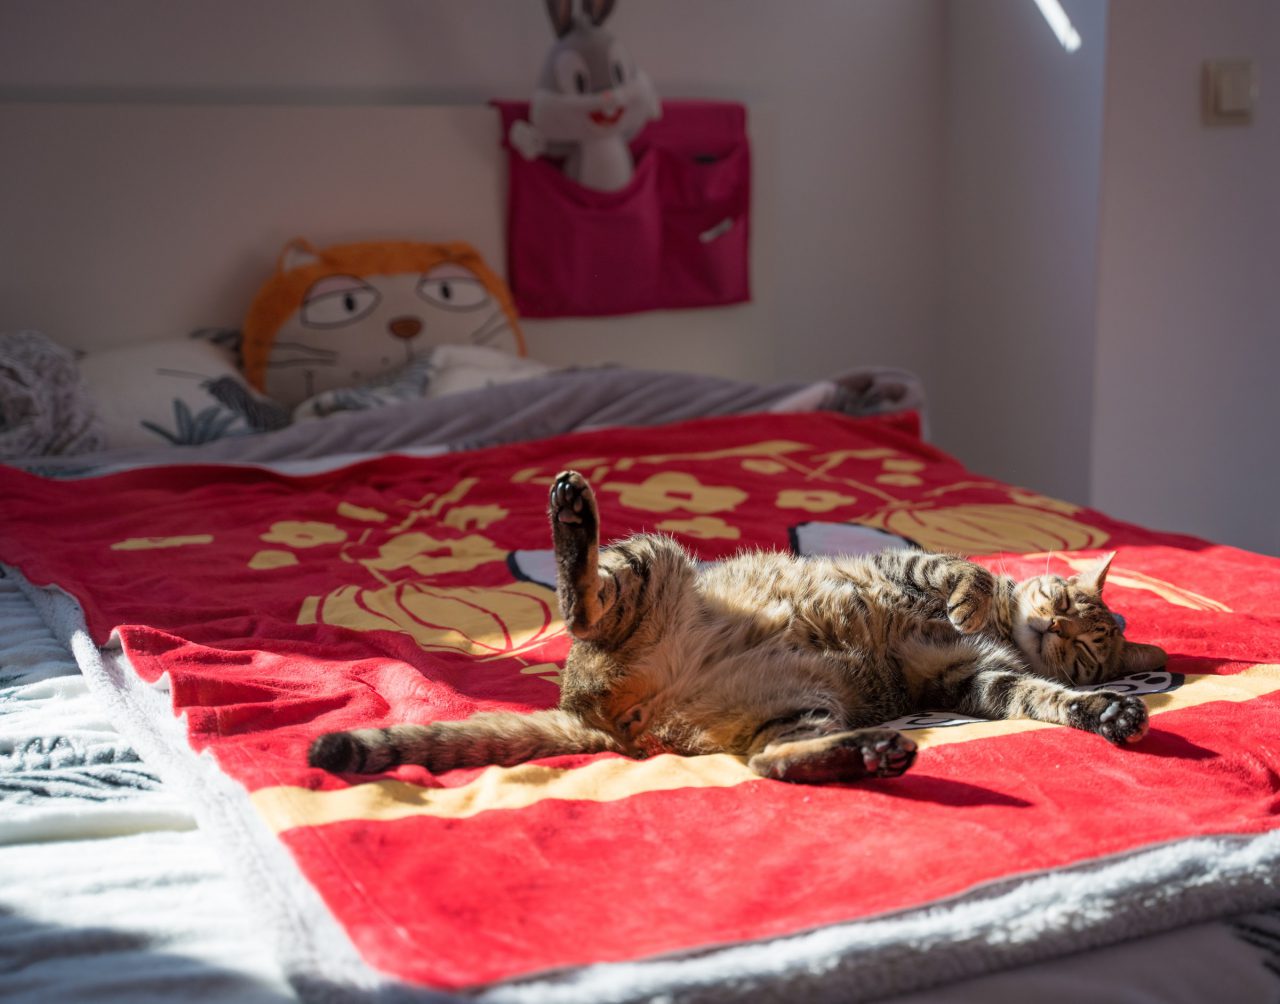 Cat sleeps on bed in sun